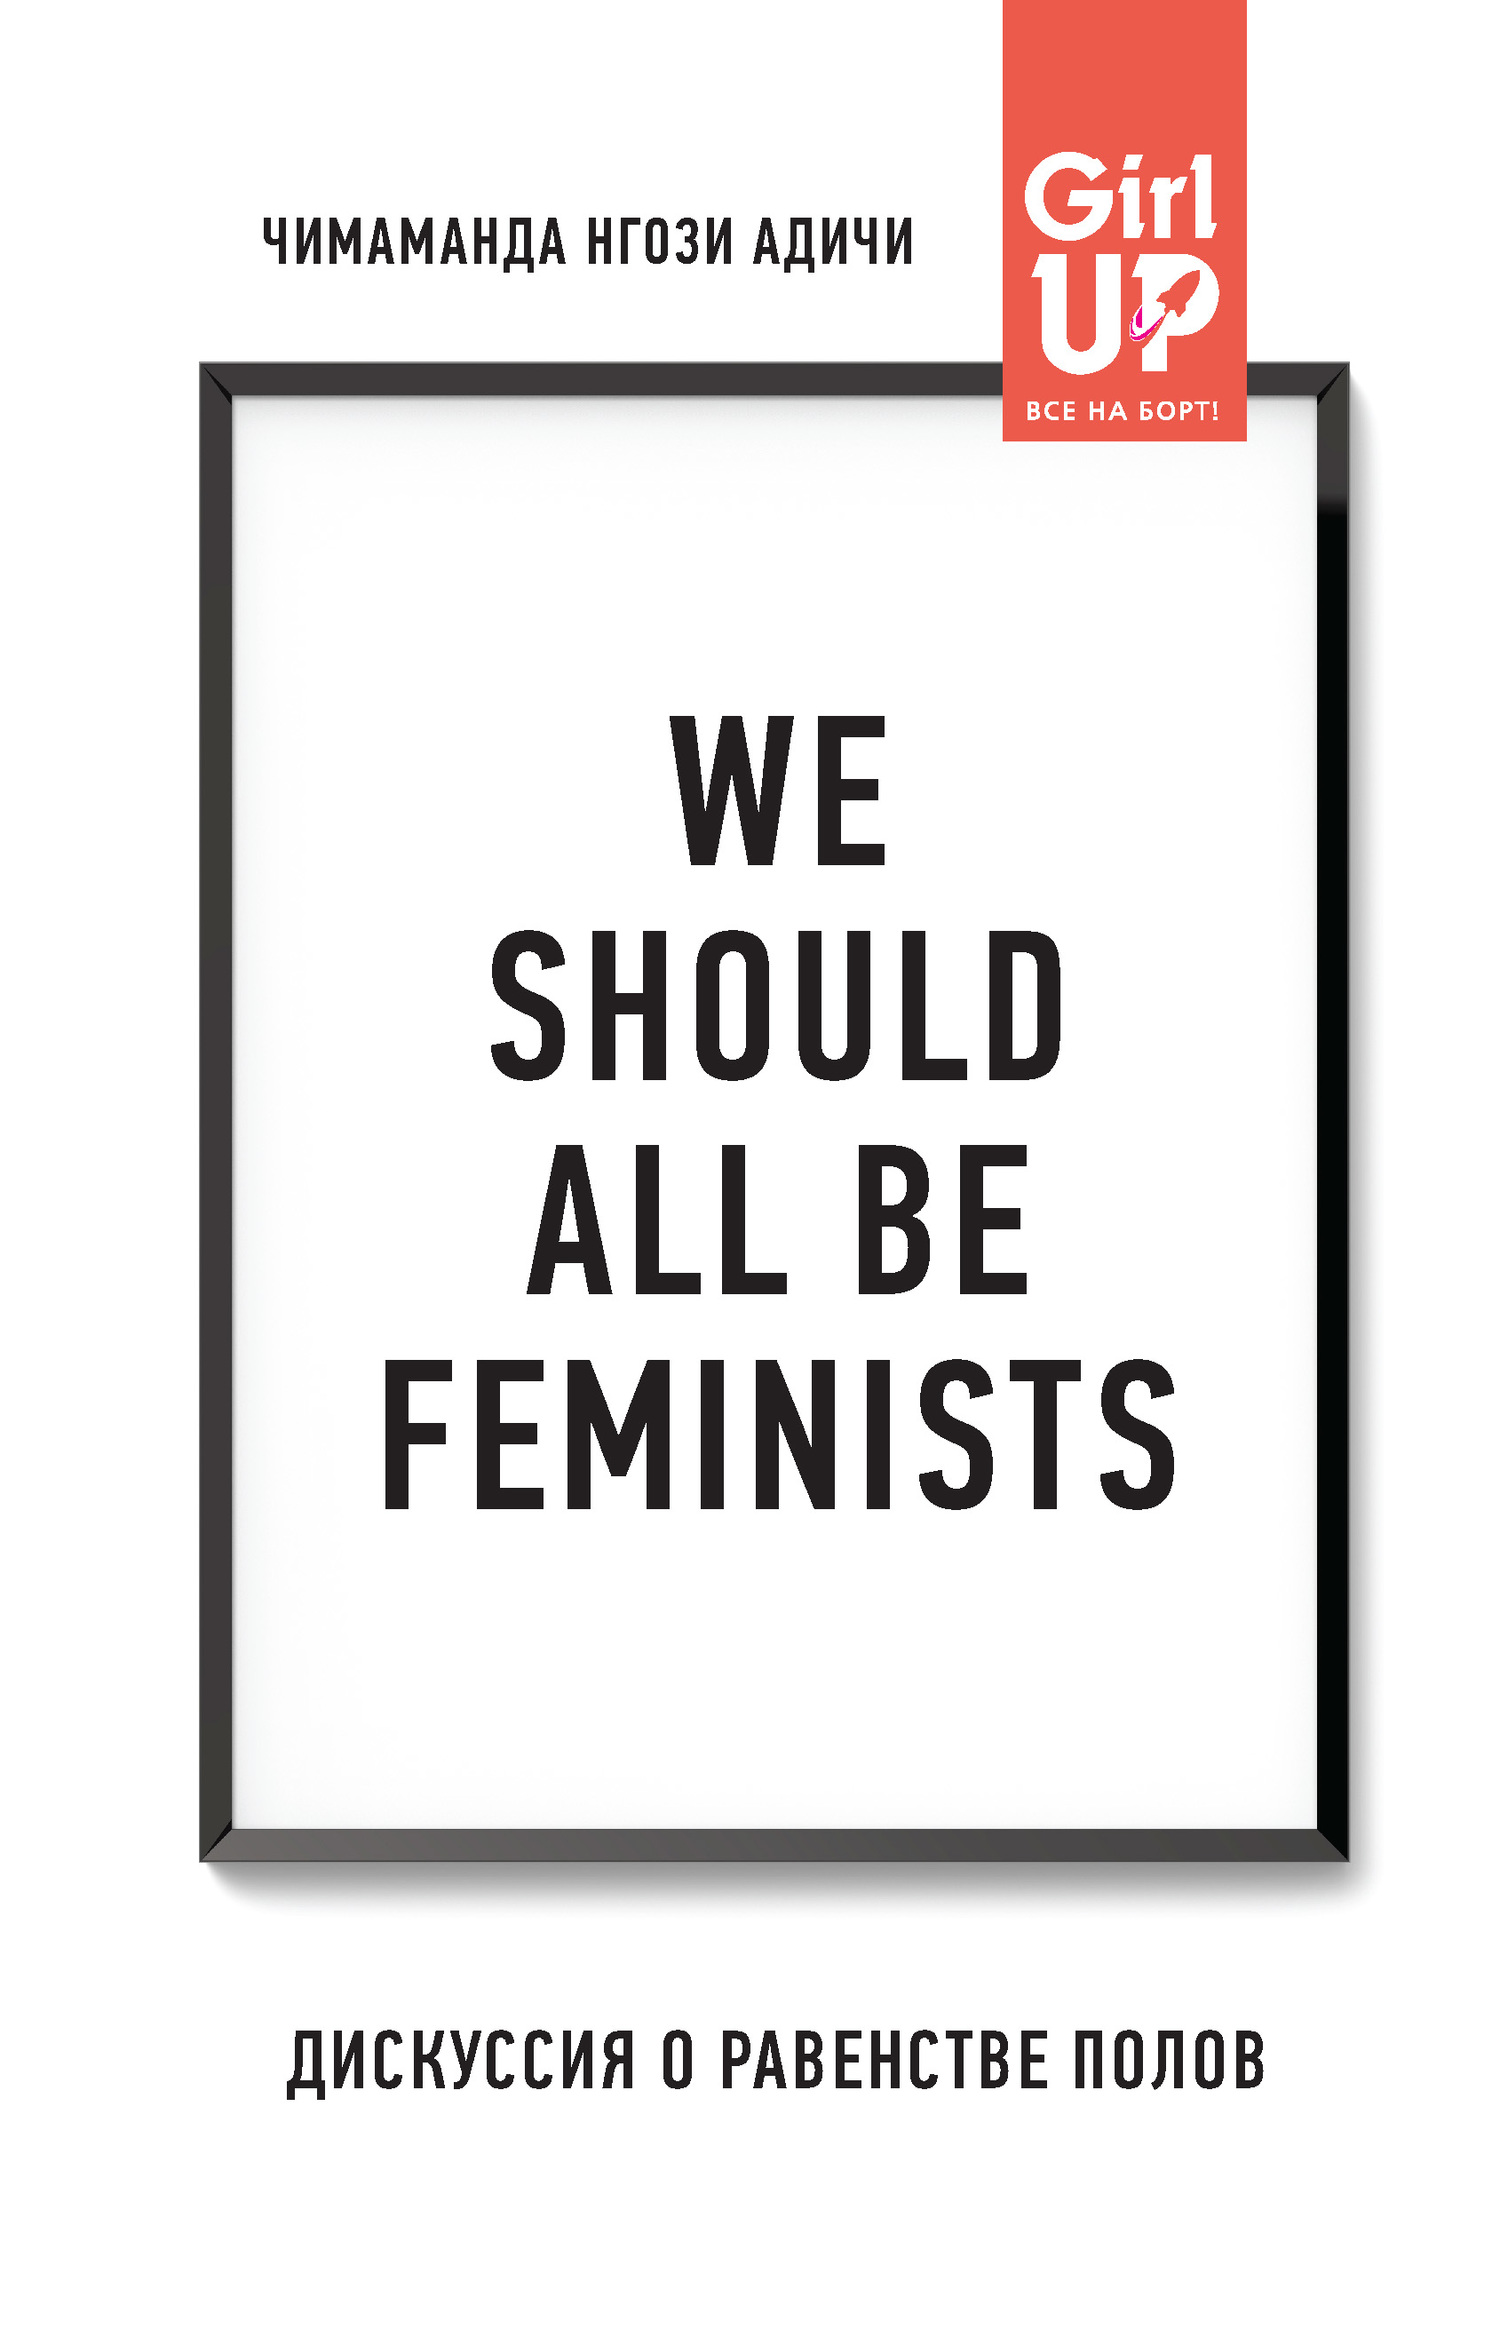 Adichi Chimamanda - We should all be feminists. Дискуссия о равенстве полов скачать бесплатно